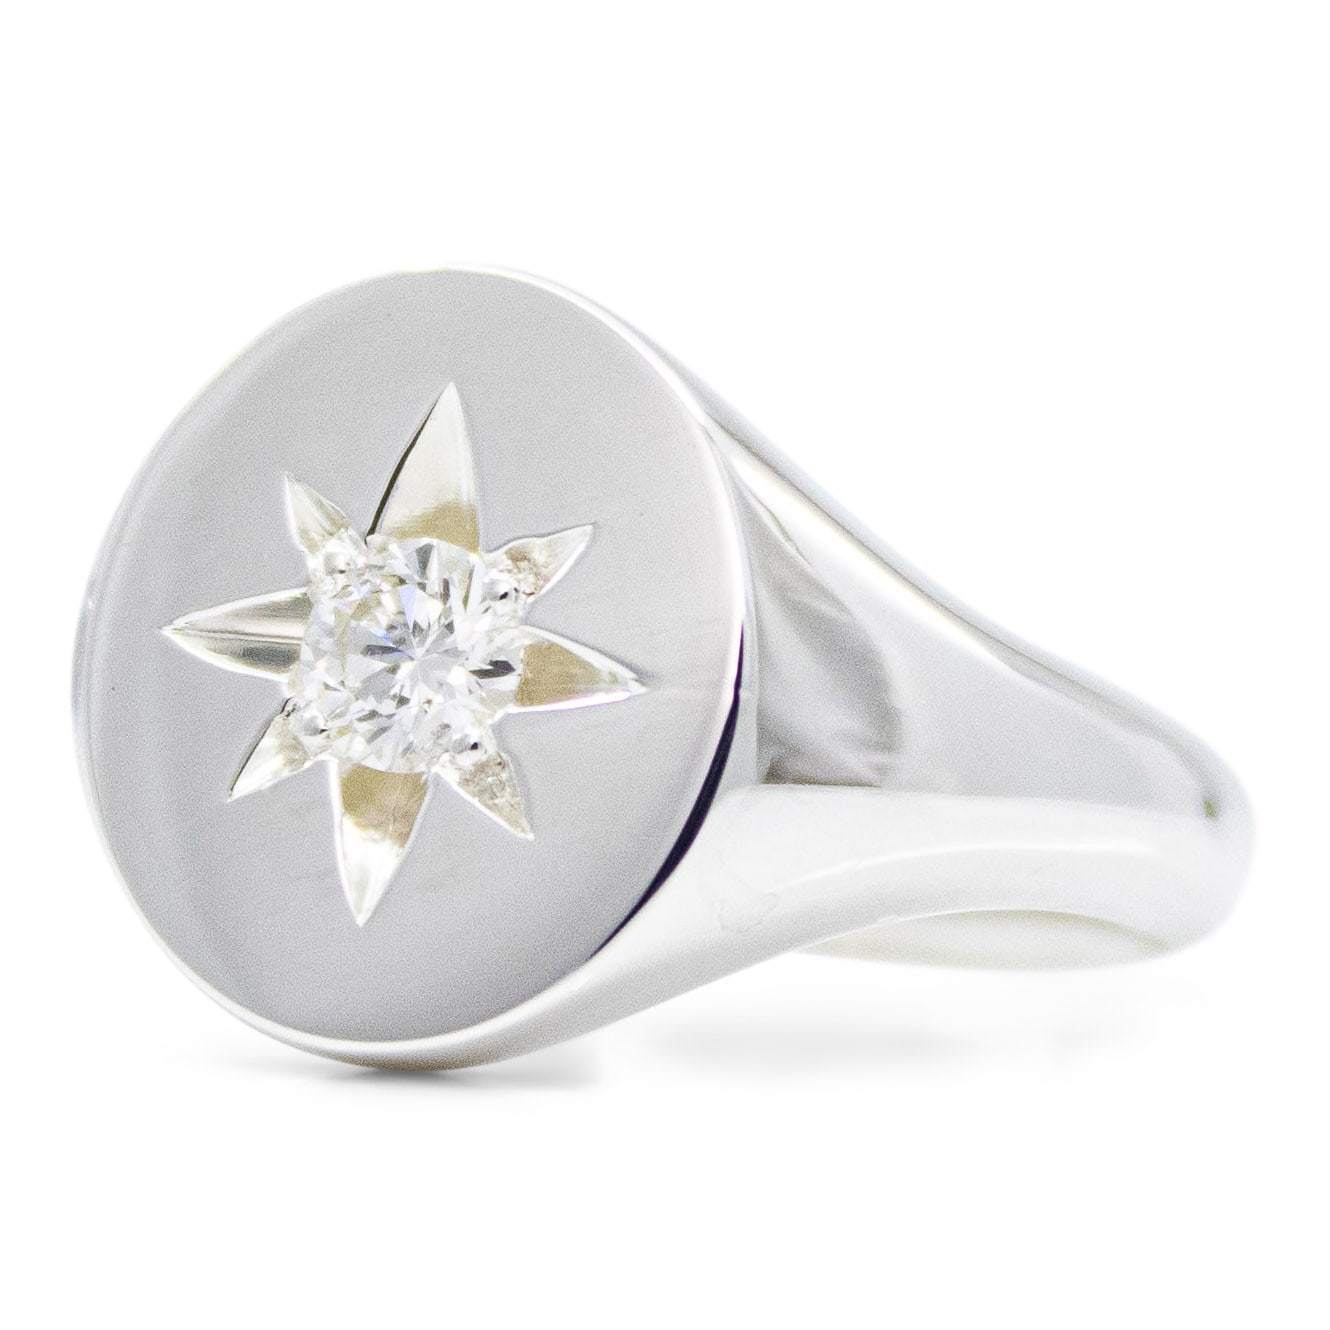 Sophia Perez Jewellery Rings Shining Star Diamond Ring